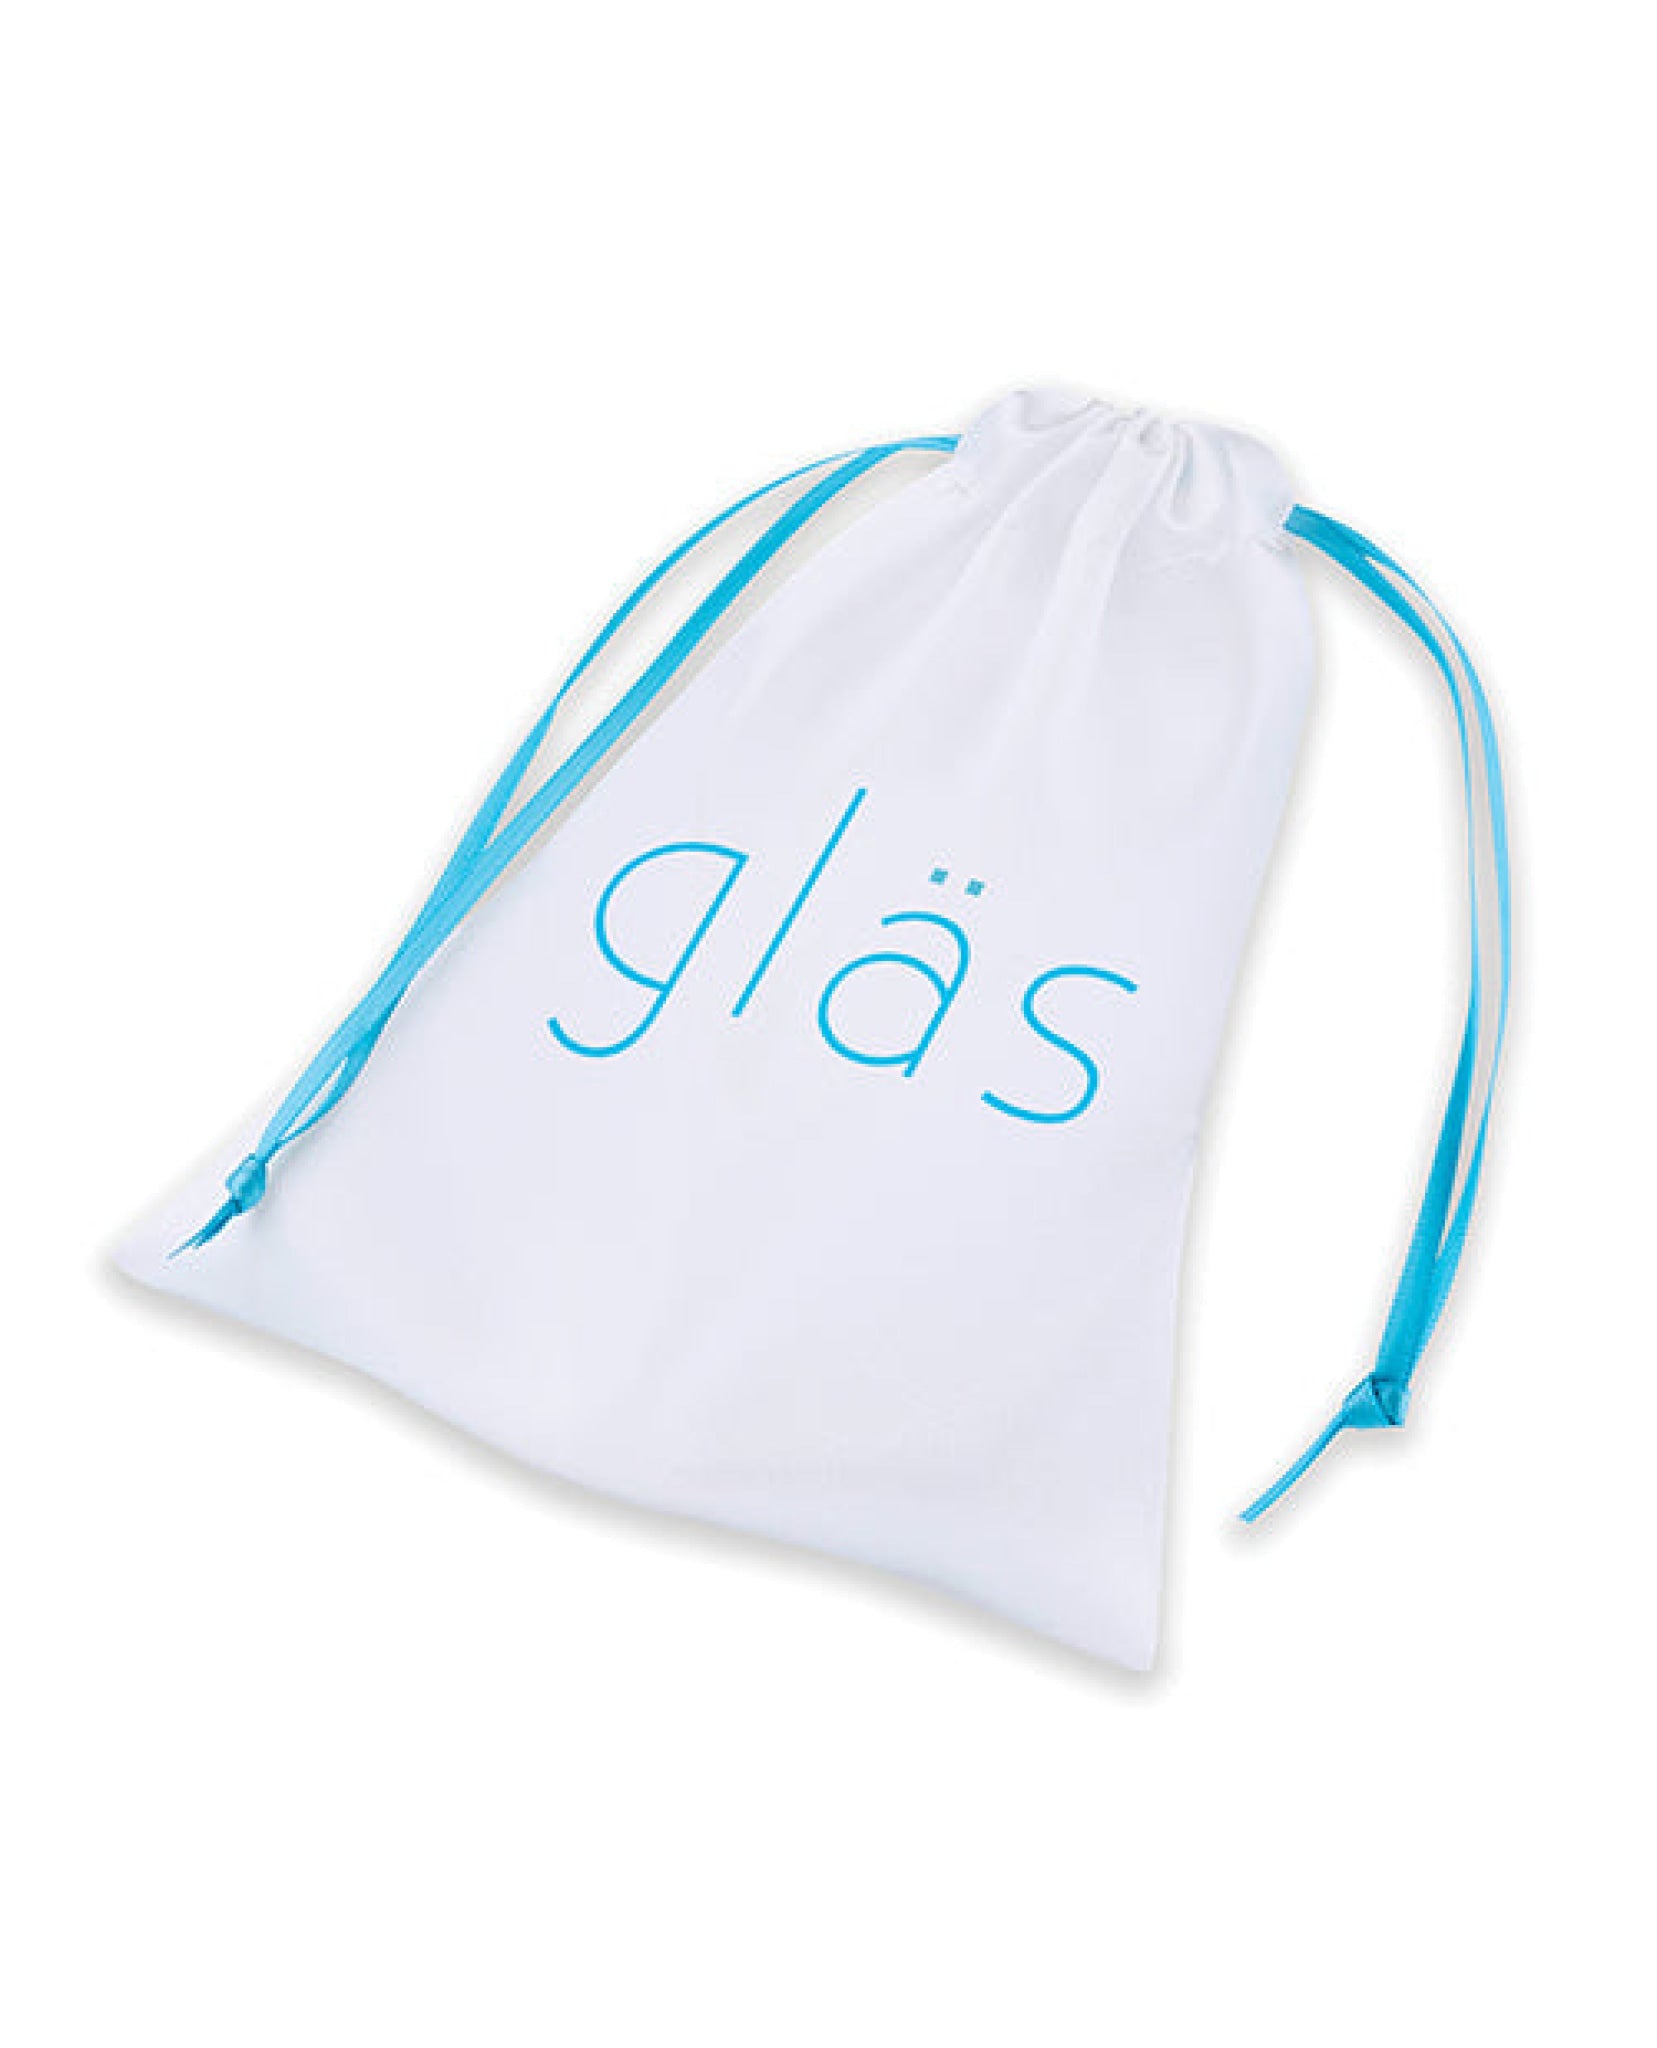 Glas 4" Beaded Glass Butt Plug W/tapered Base - Clear Gläs